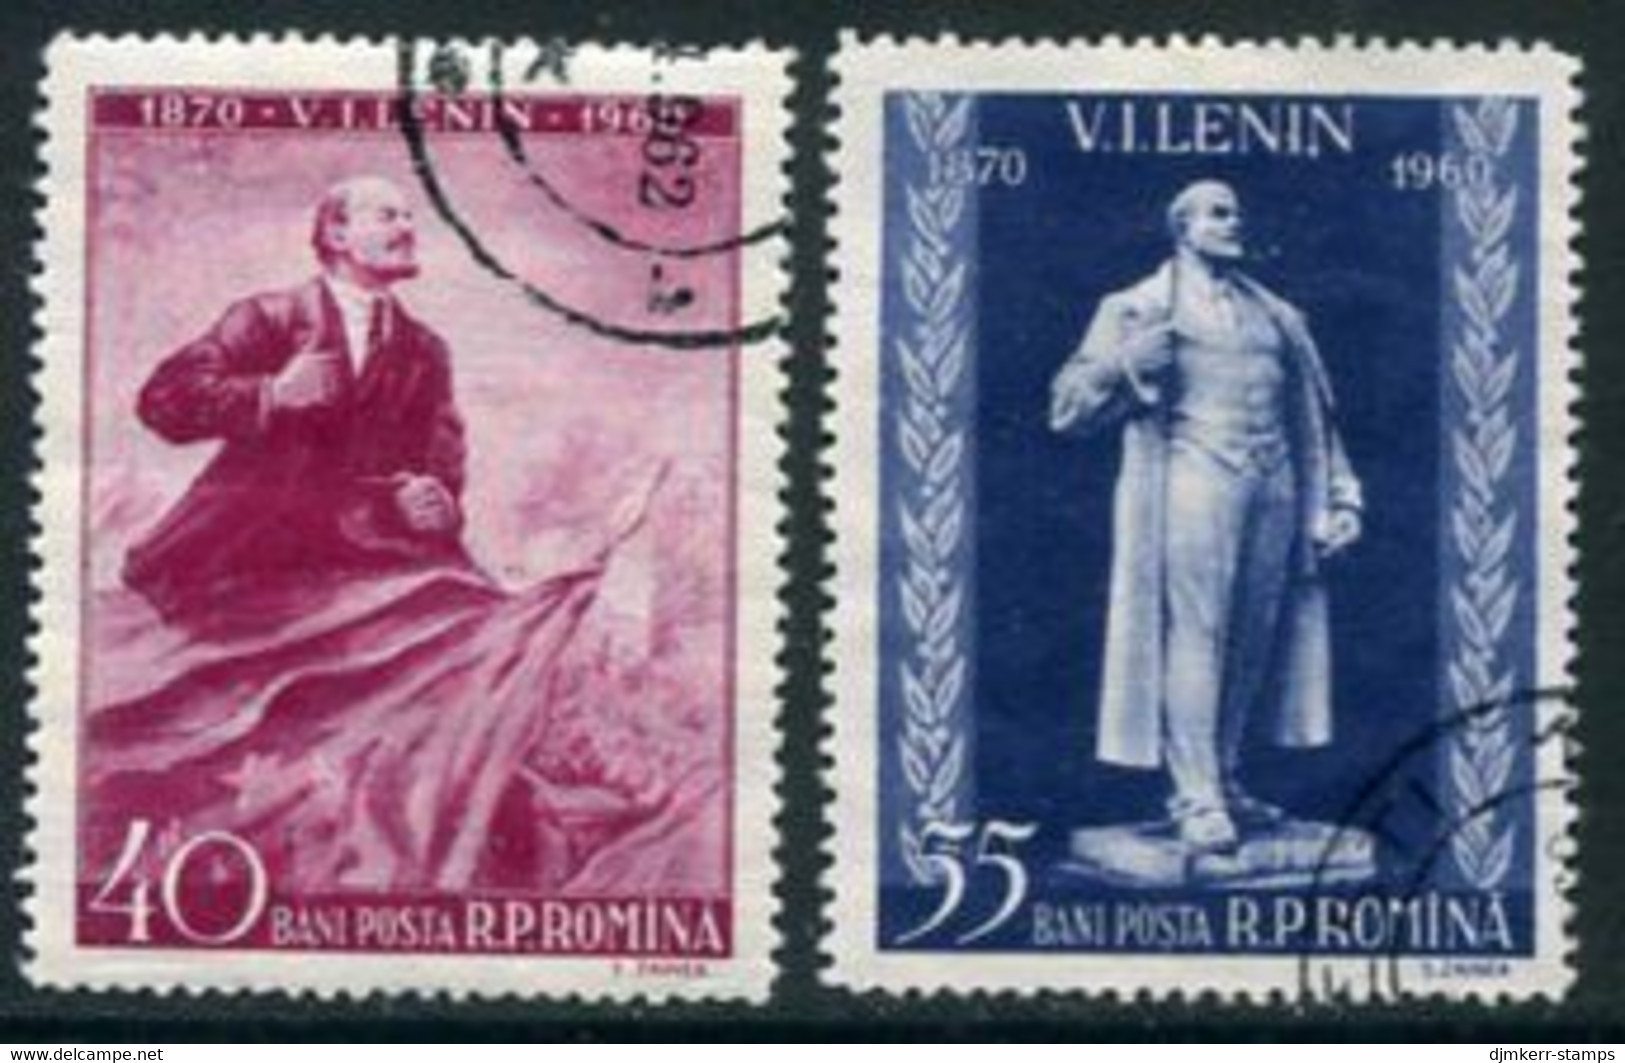 ROMANIA 1960 Lenin Anniversary Used.  Michel 1840-41 - Gebraucht